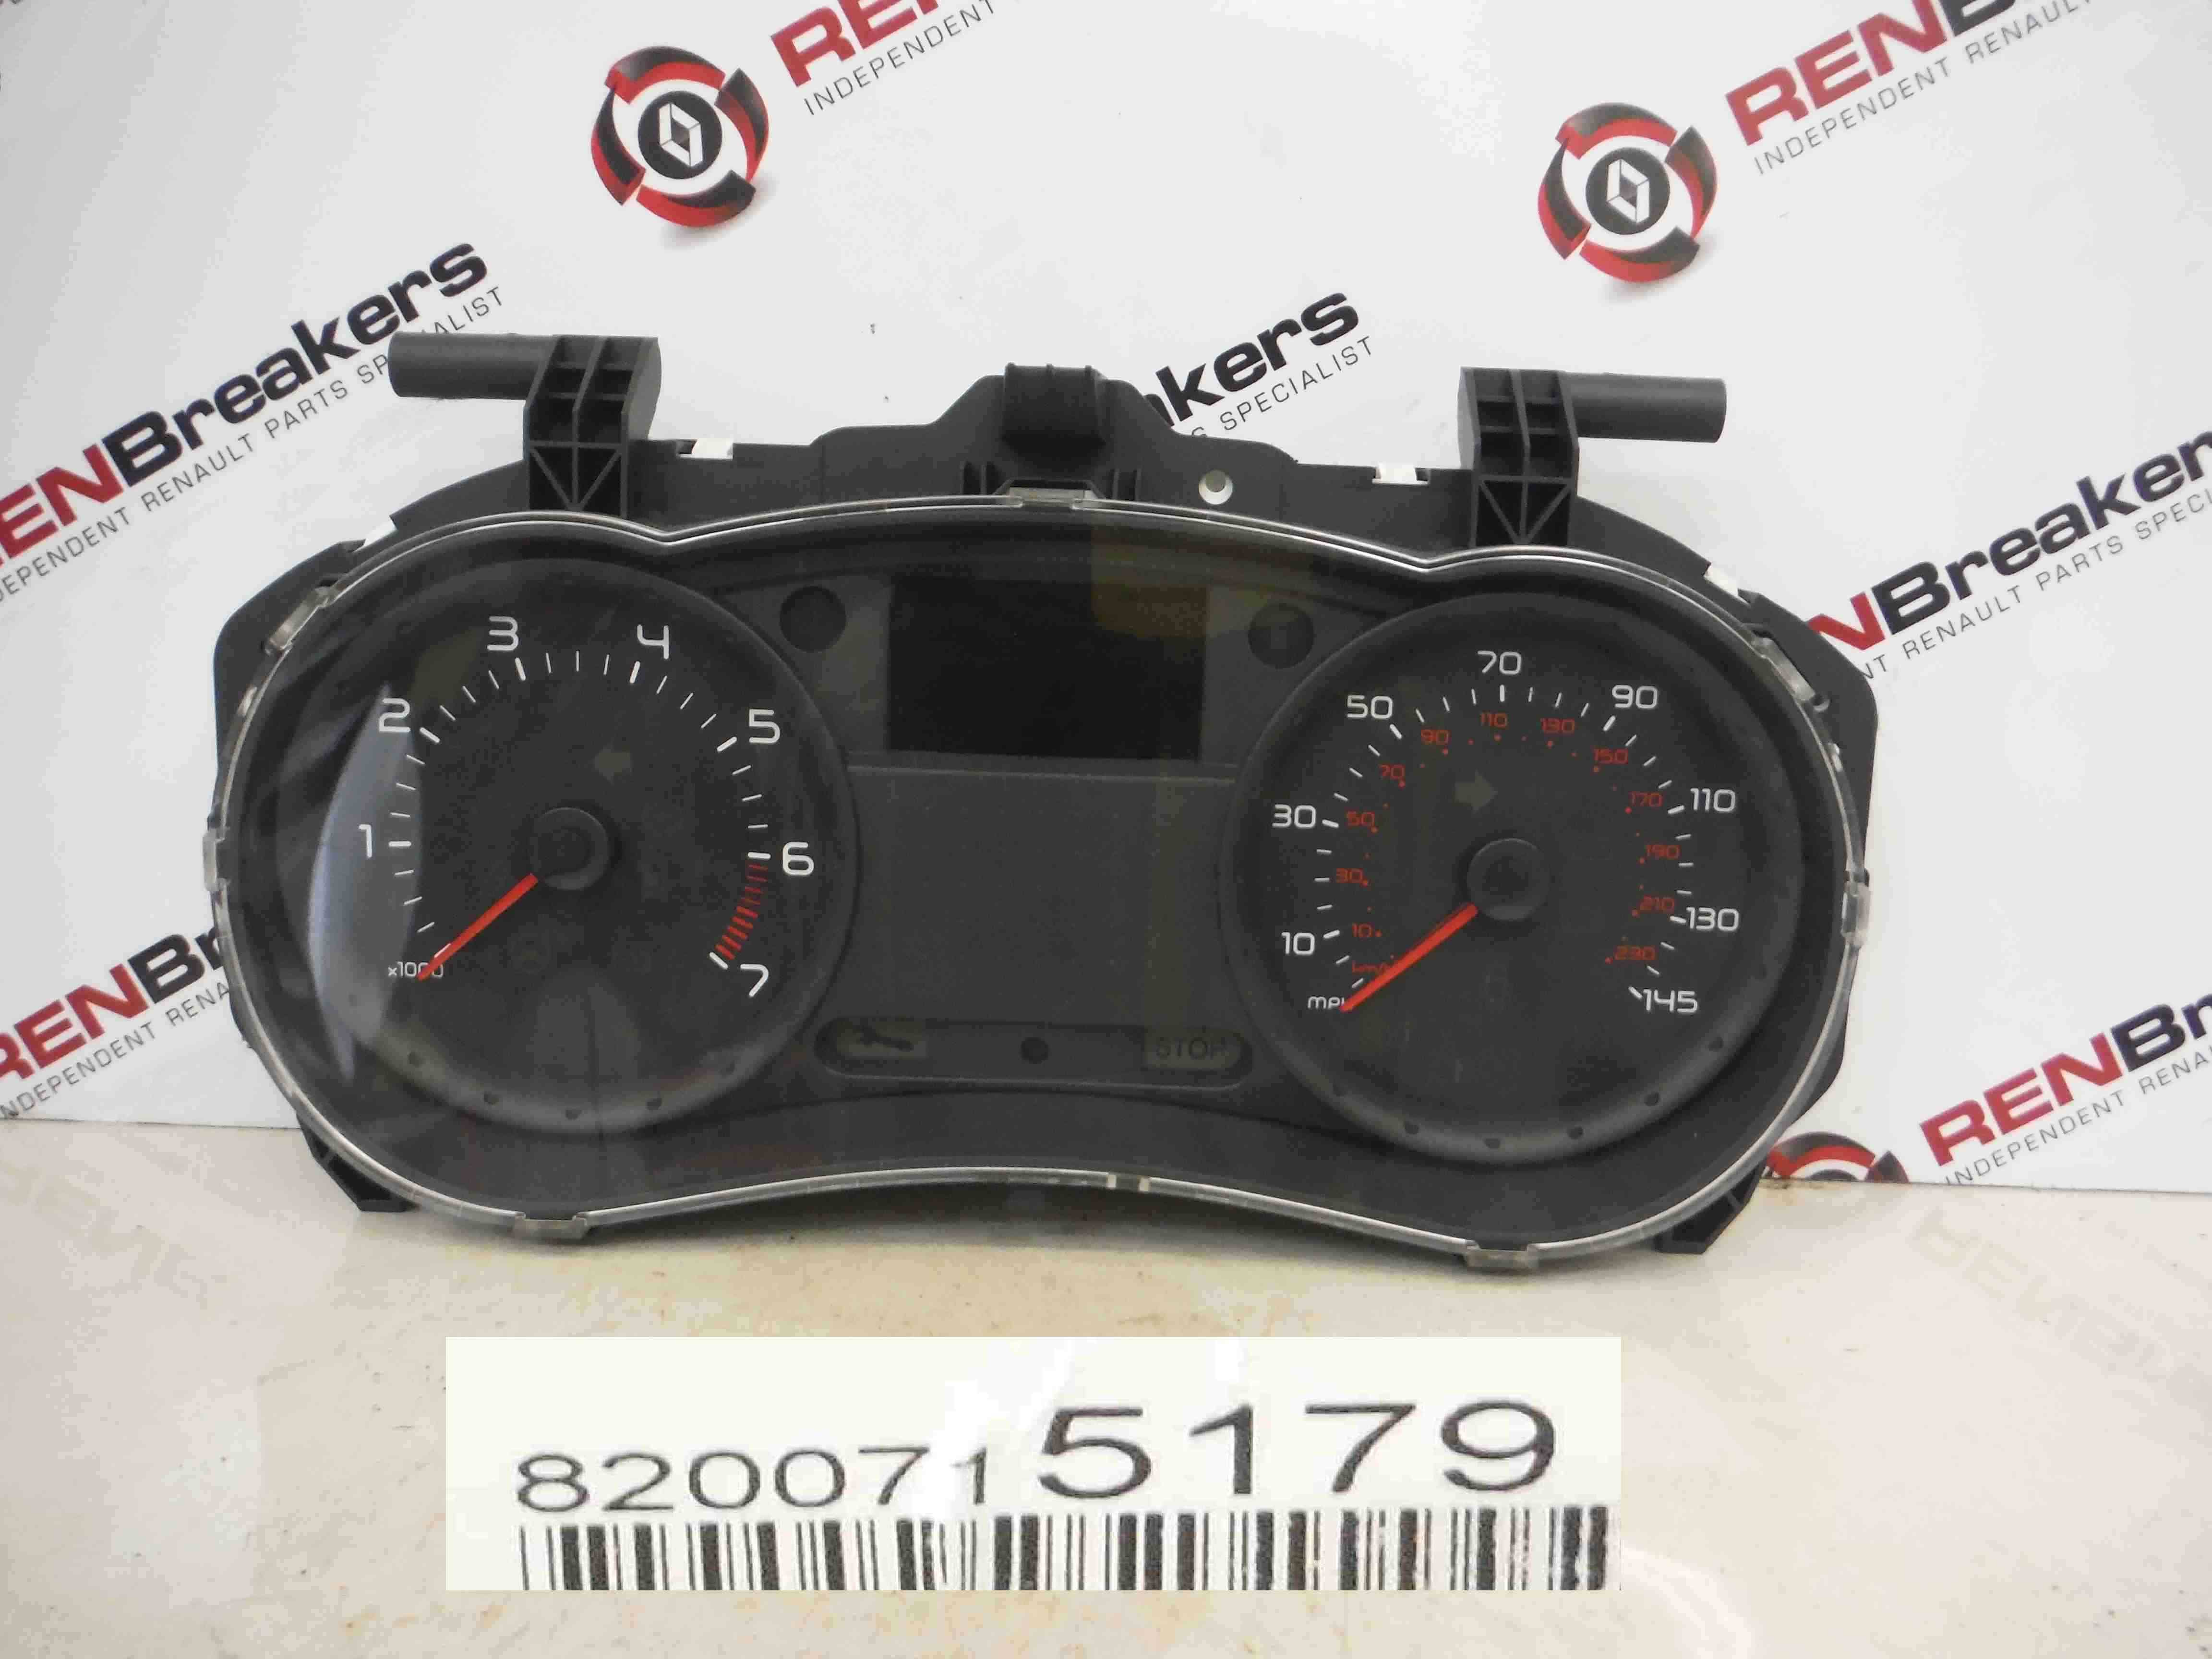 Renault Clio MK3 2005-2012 Instrument Panel Dials Clocks Gauges 141K 8200715179